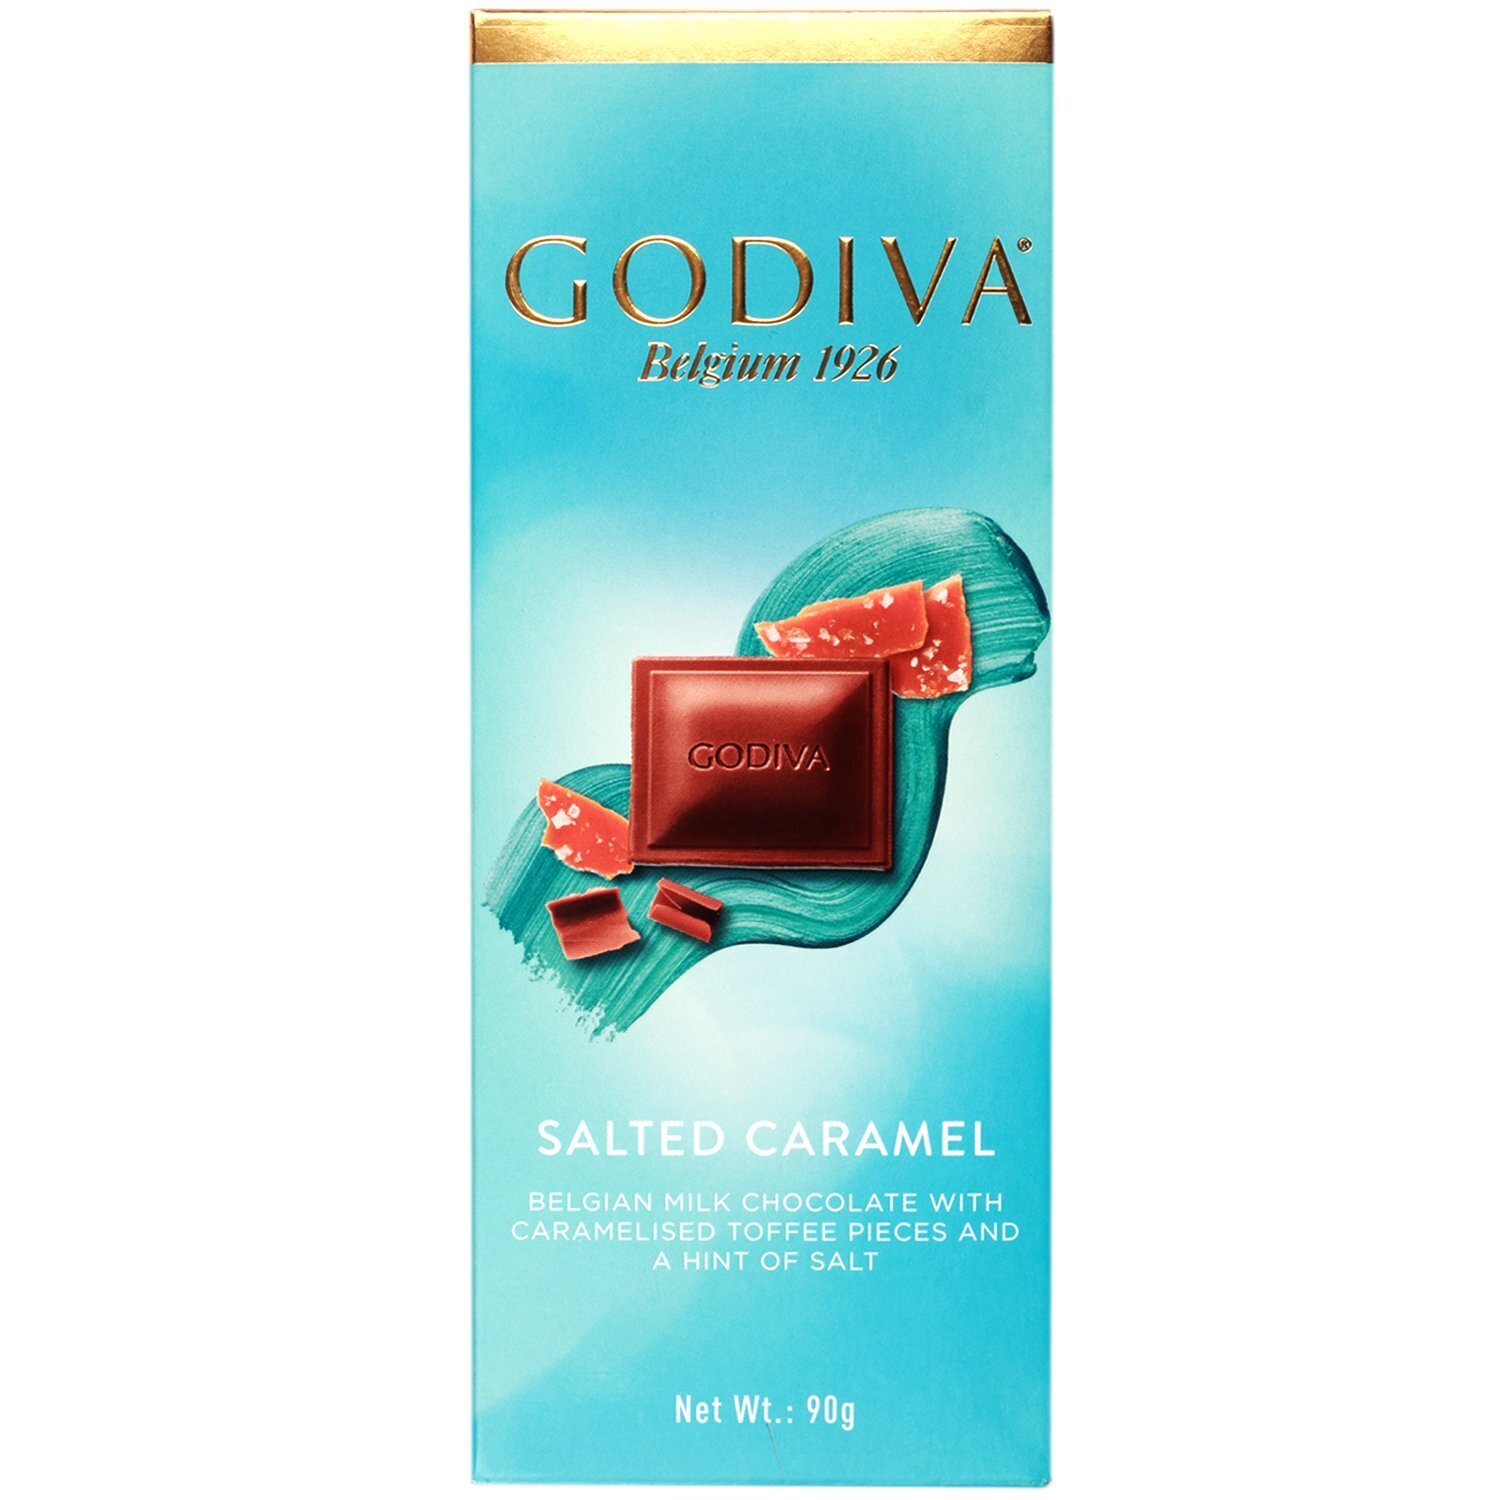 Godiva Salted Caramel Belgian Milk Chocolate